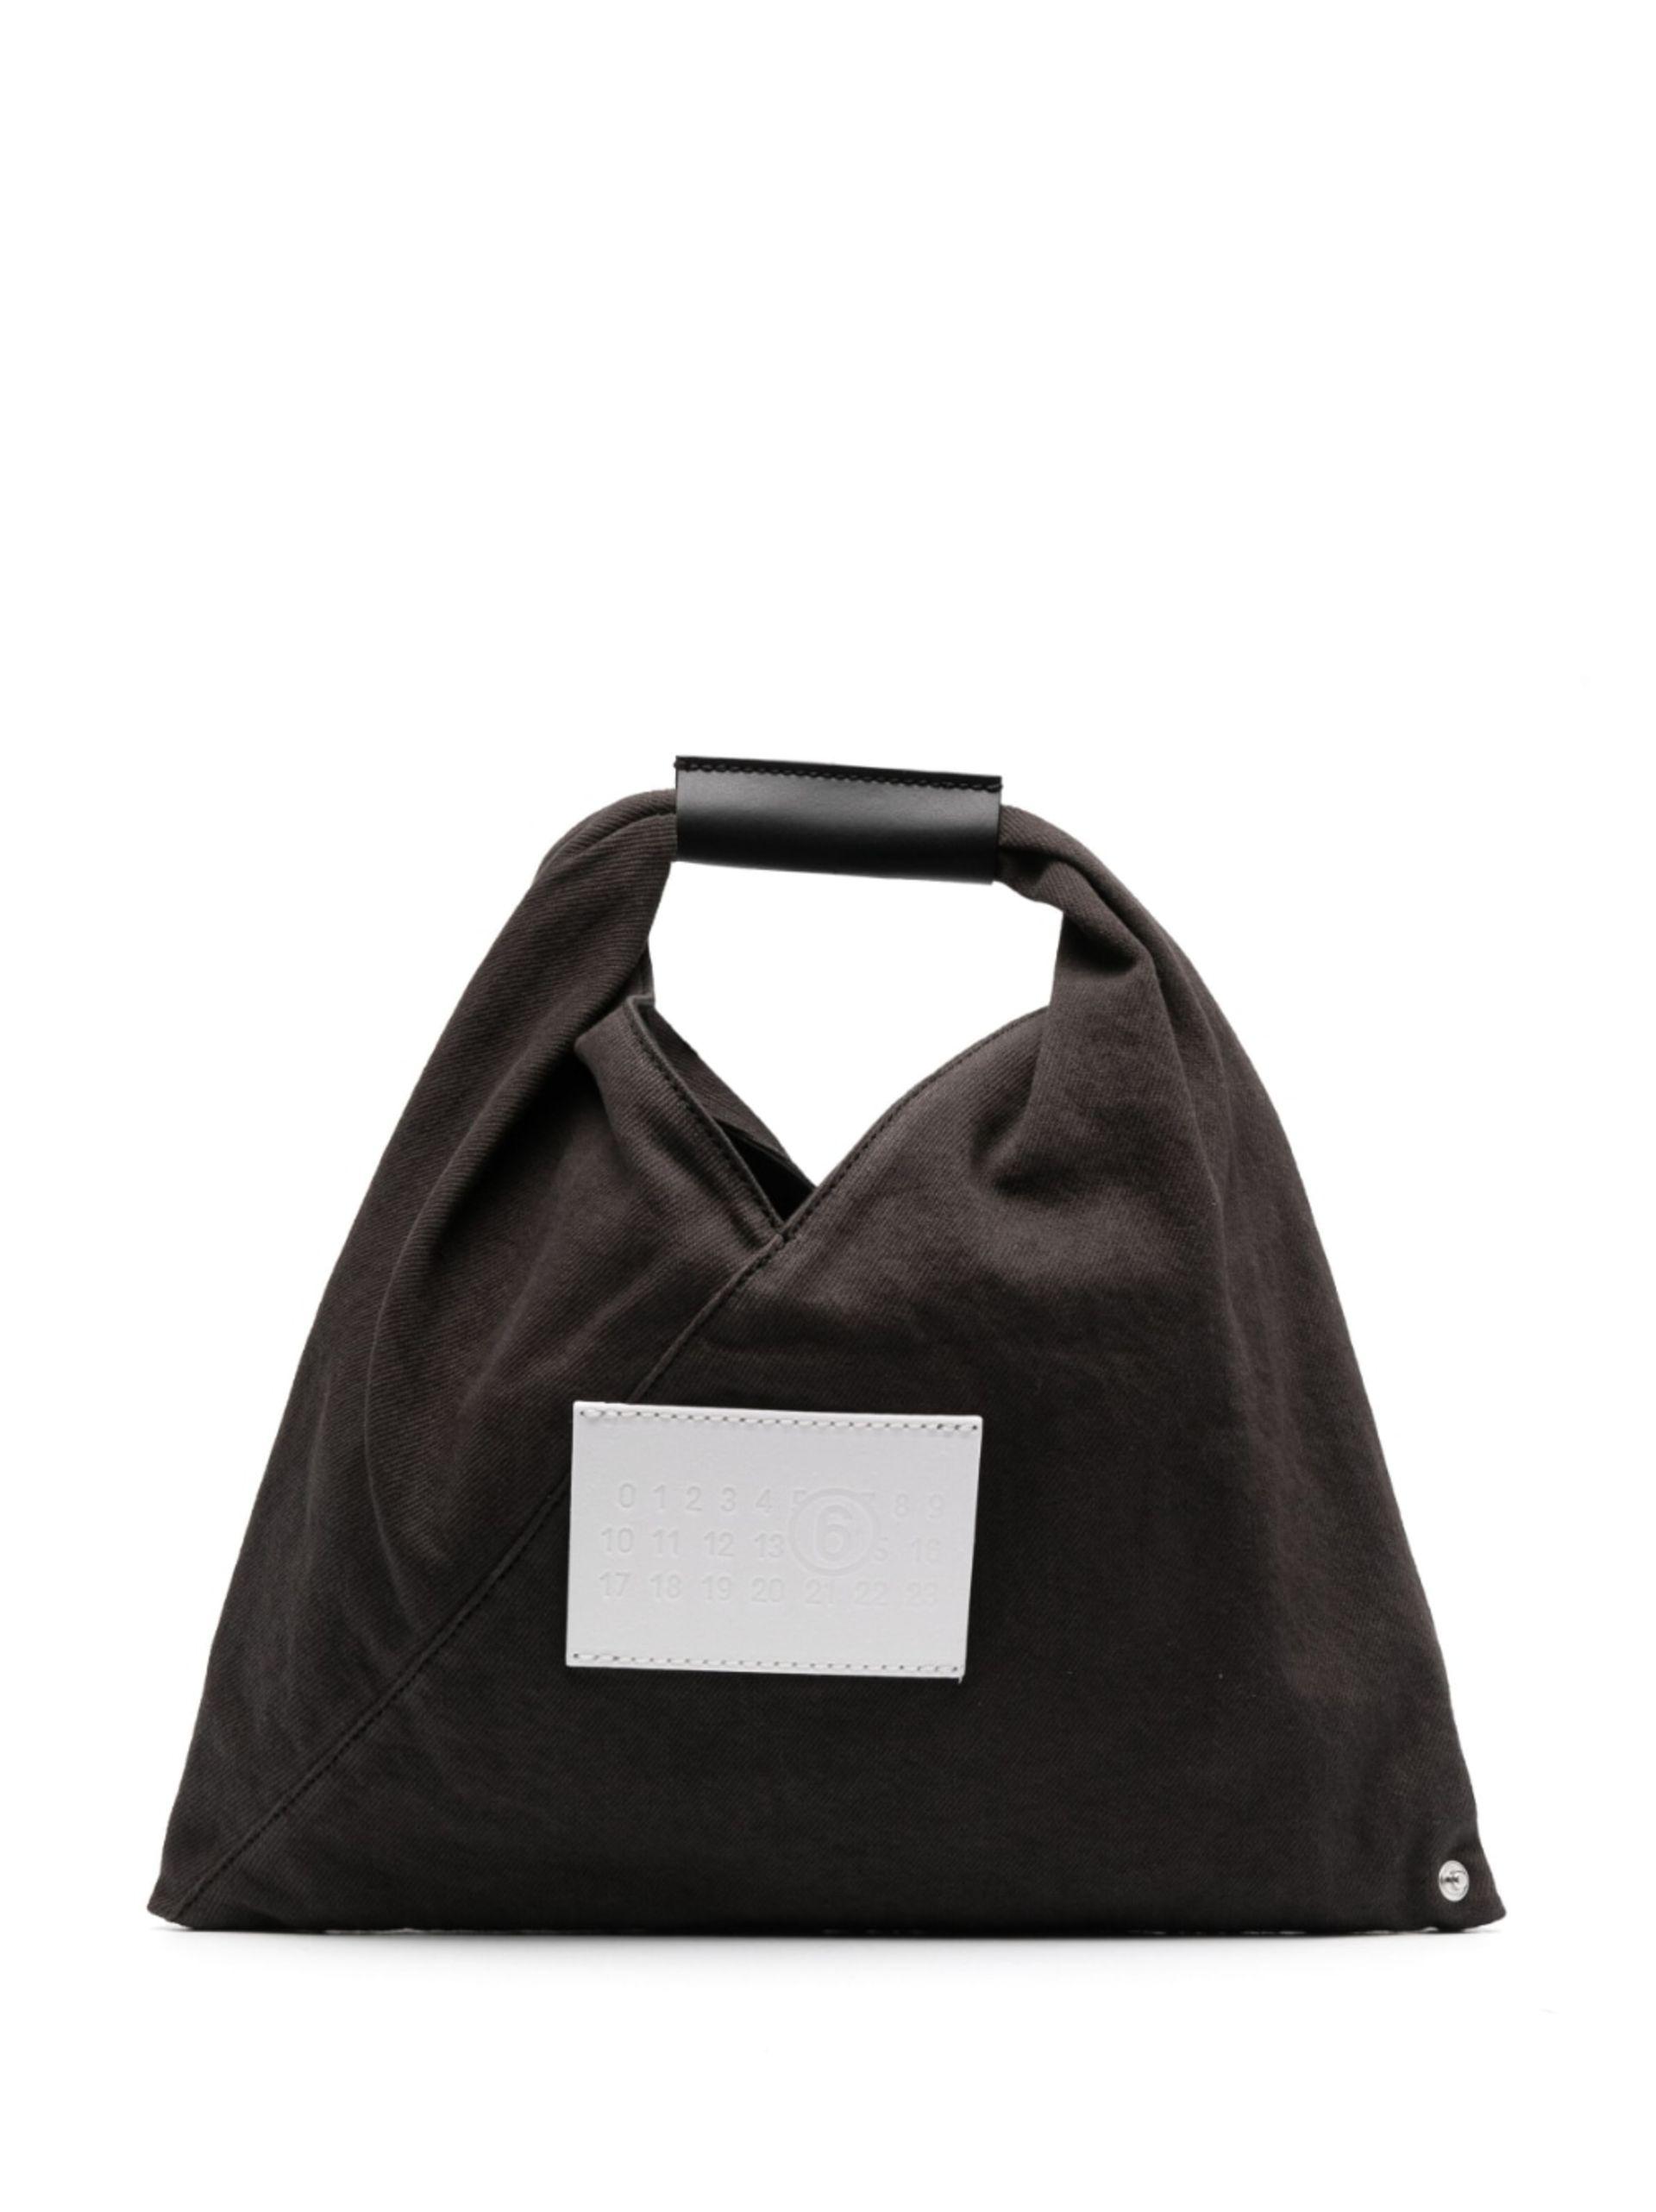 Maison Margiela Japanese Triangle Bag in Black | Lyst